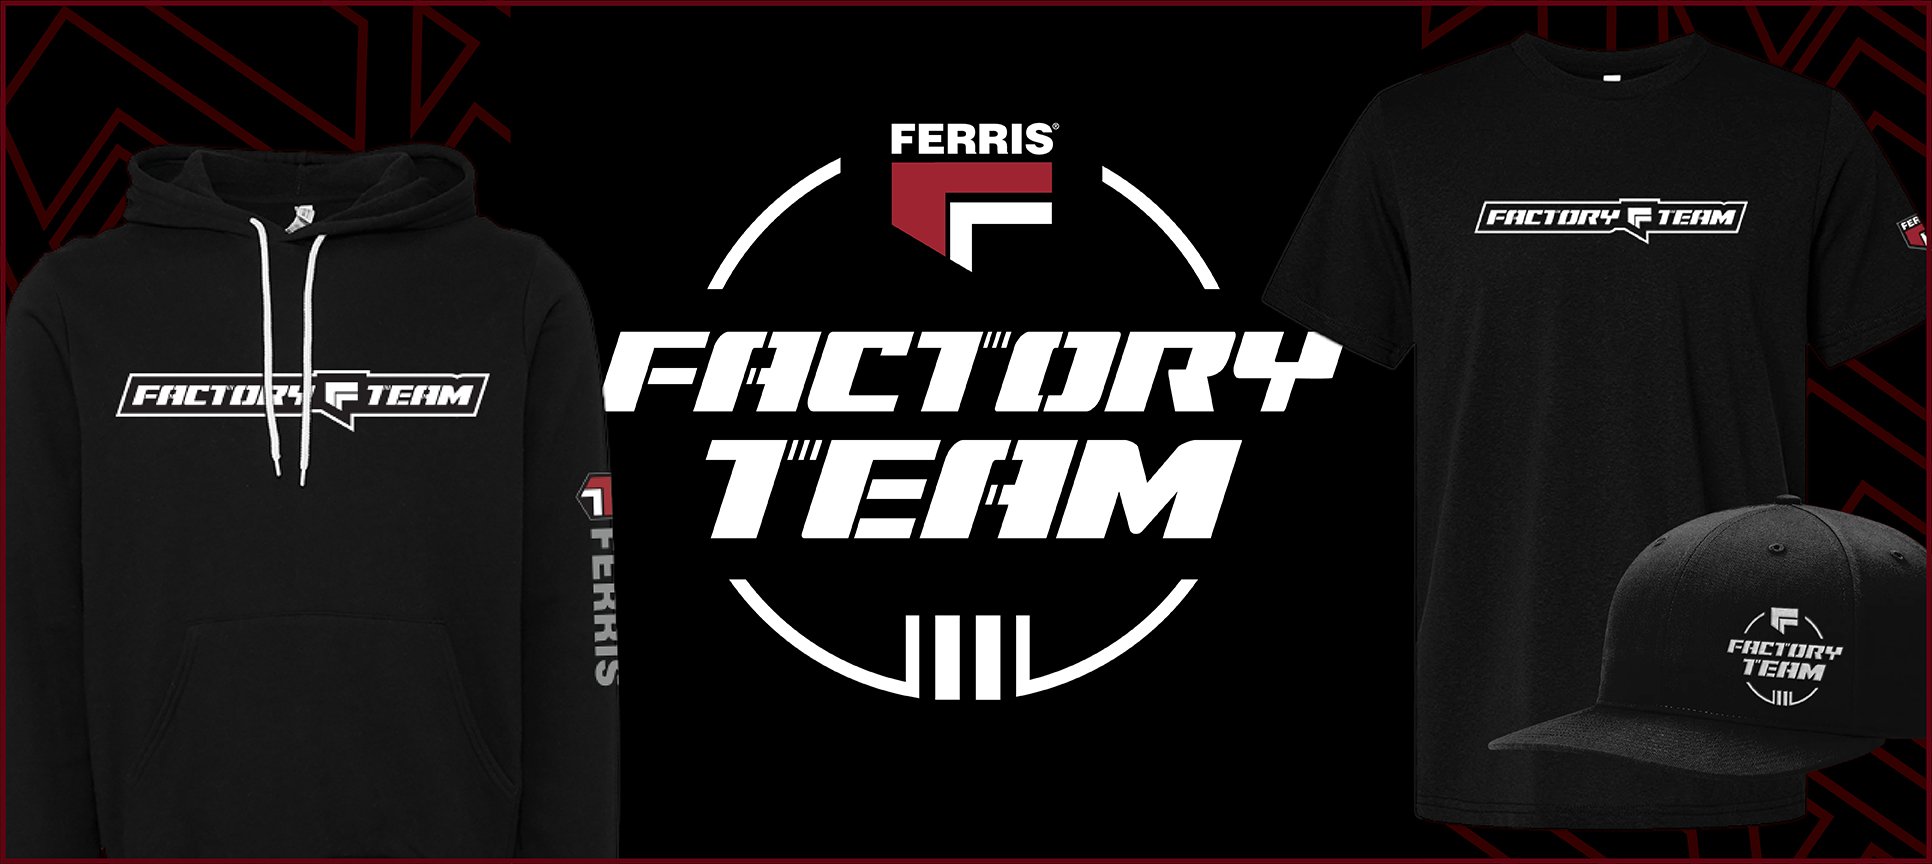 Ferris-Factory-Team-Merch-v2